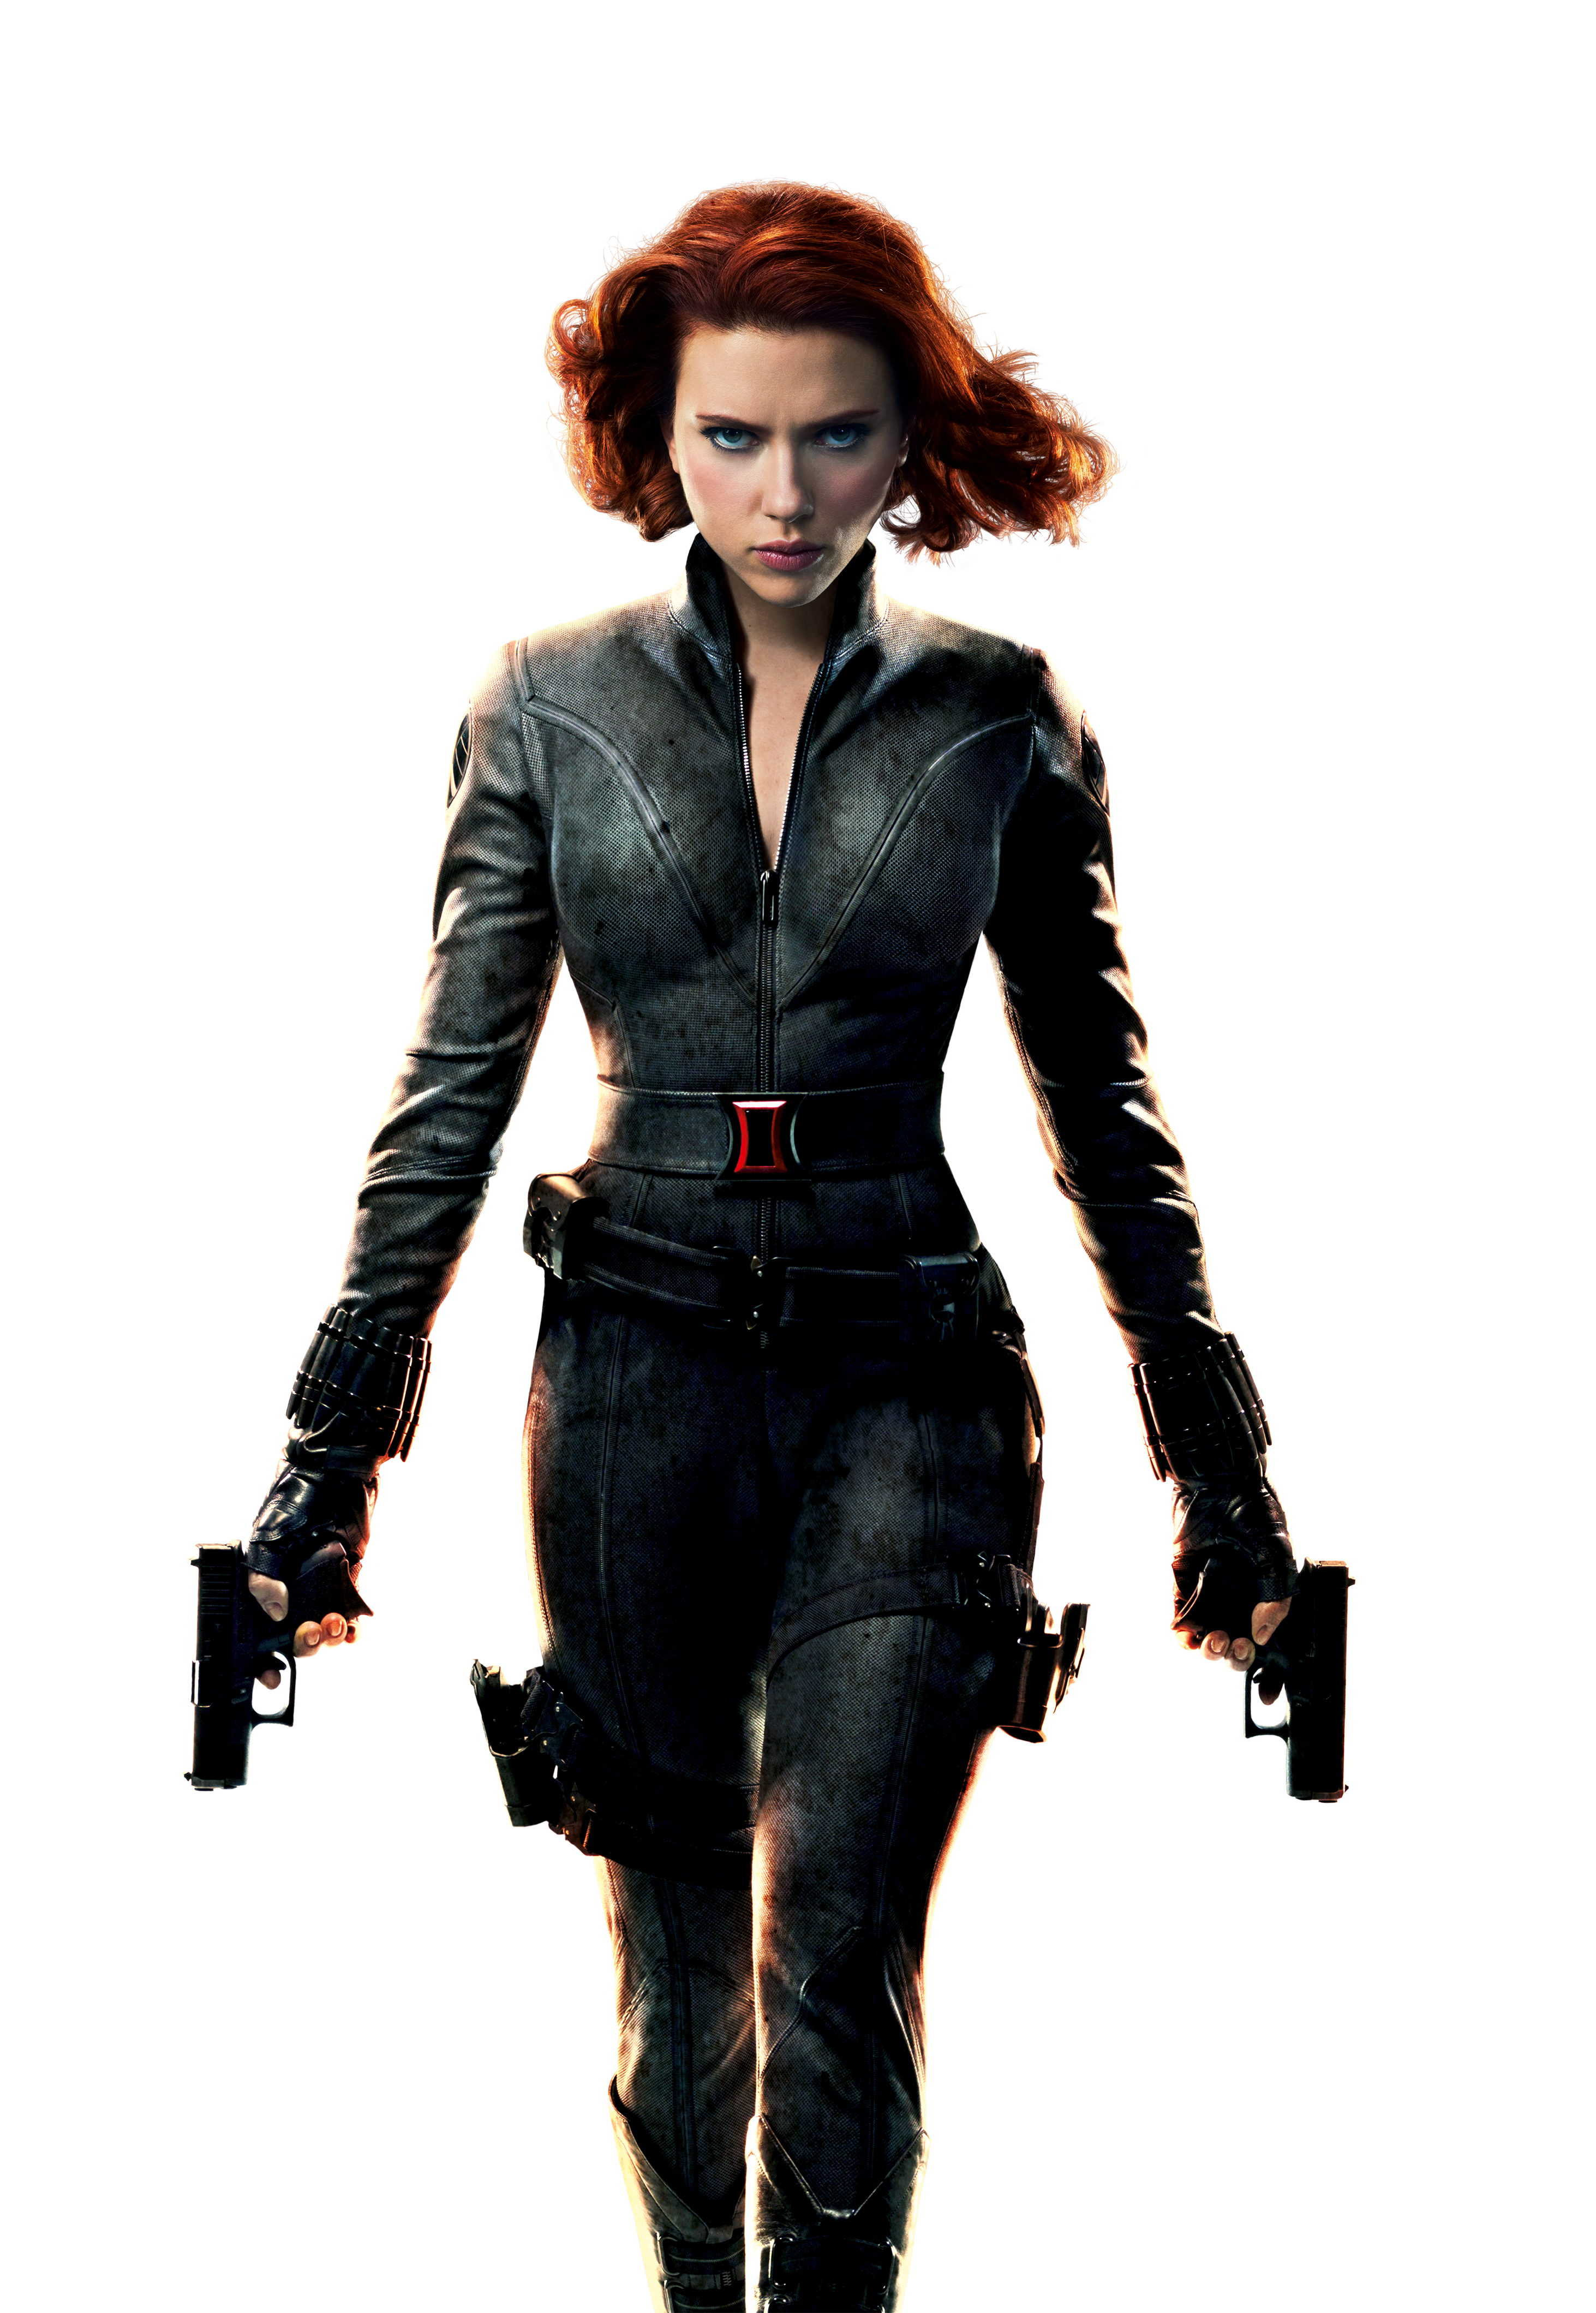 Johansson America Of Age Widow Avengers: Black Clipart